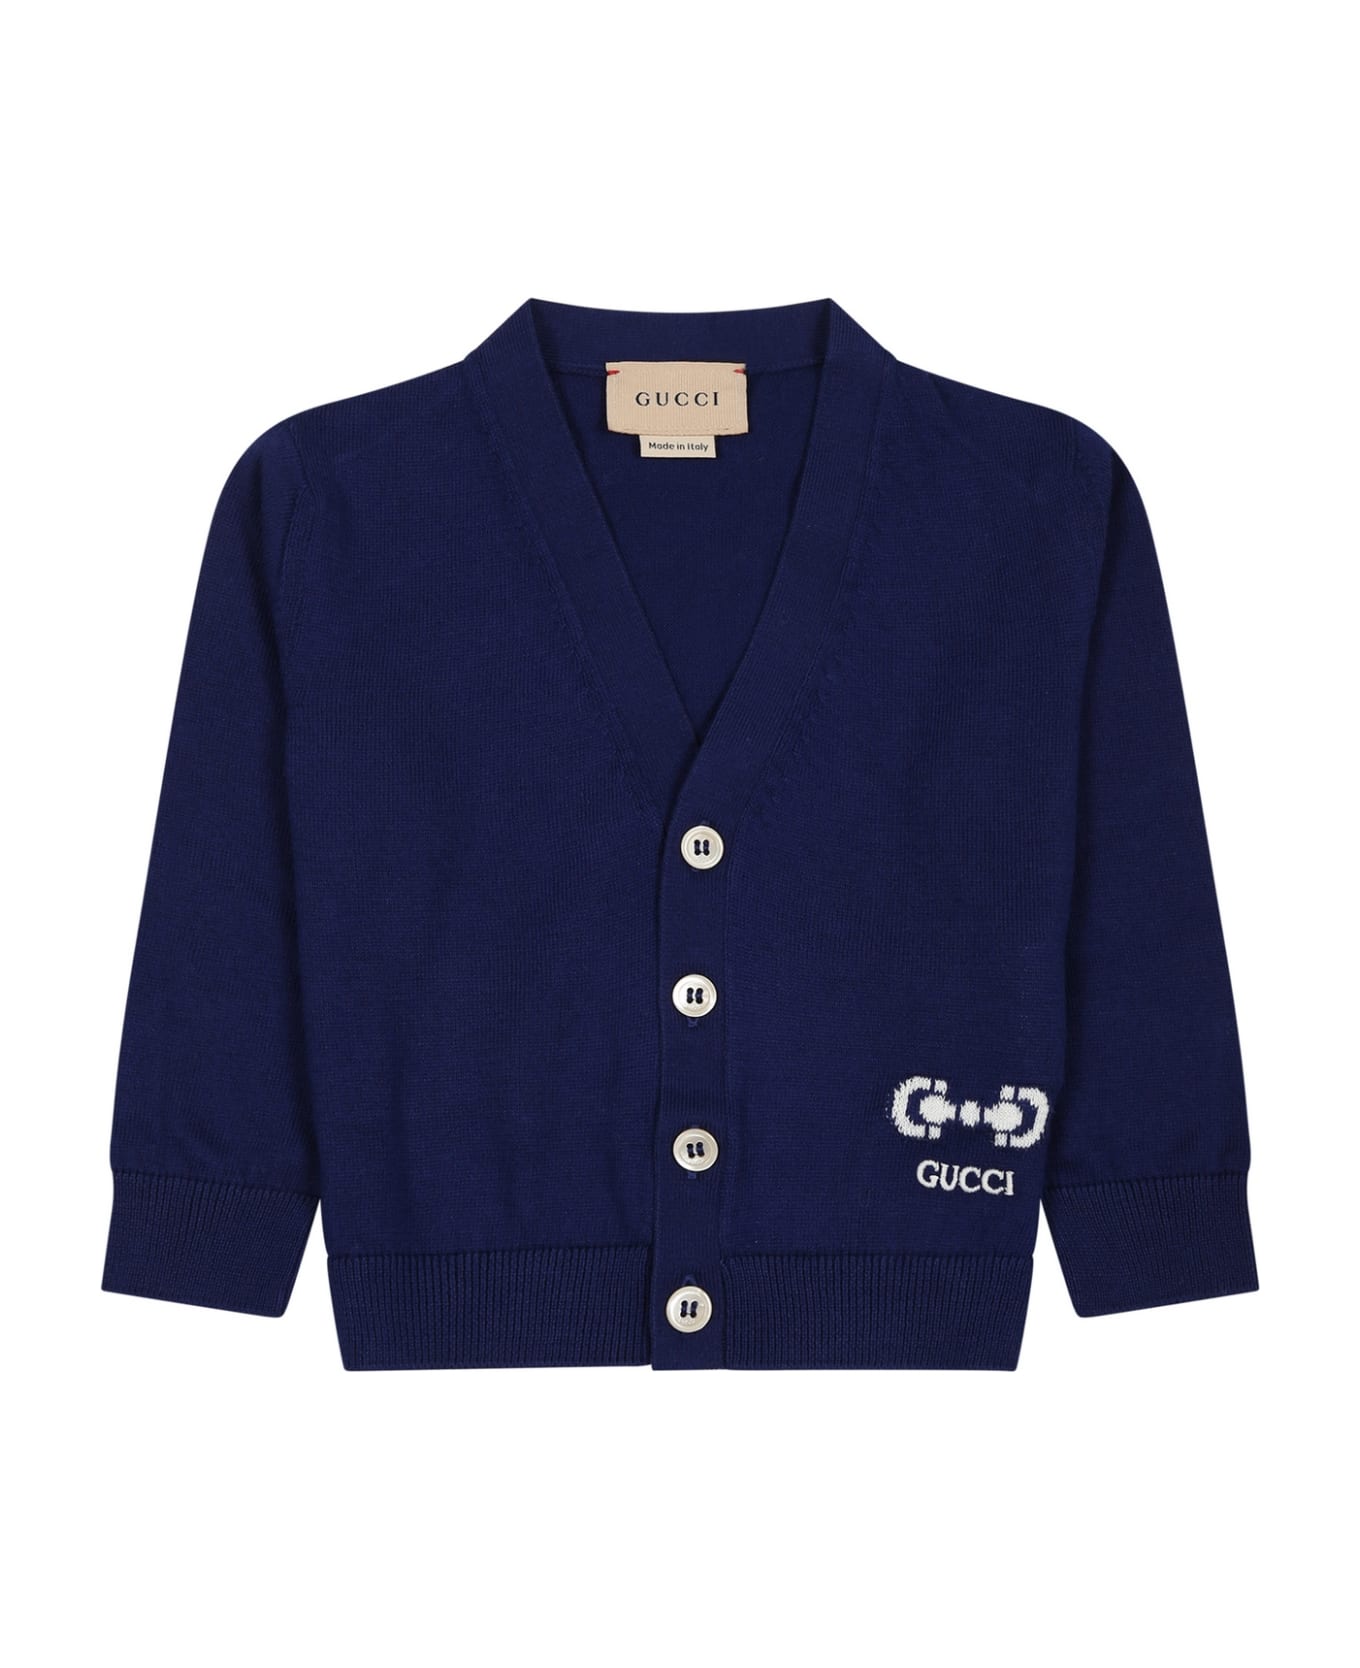 Gucci Blue Cardigan For Baby Boy With Logo - Blue